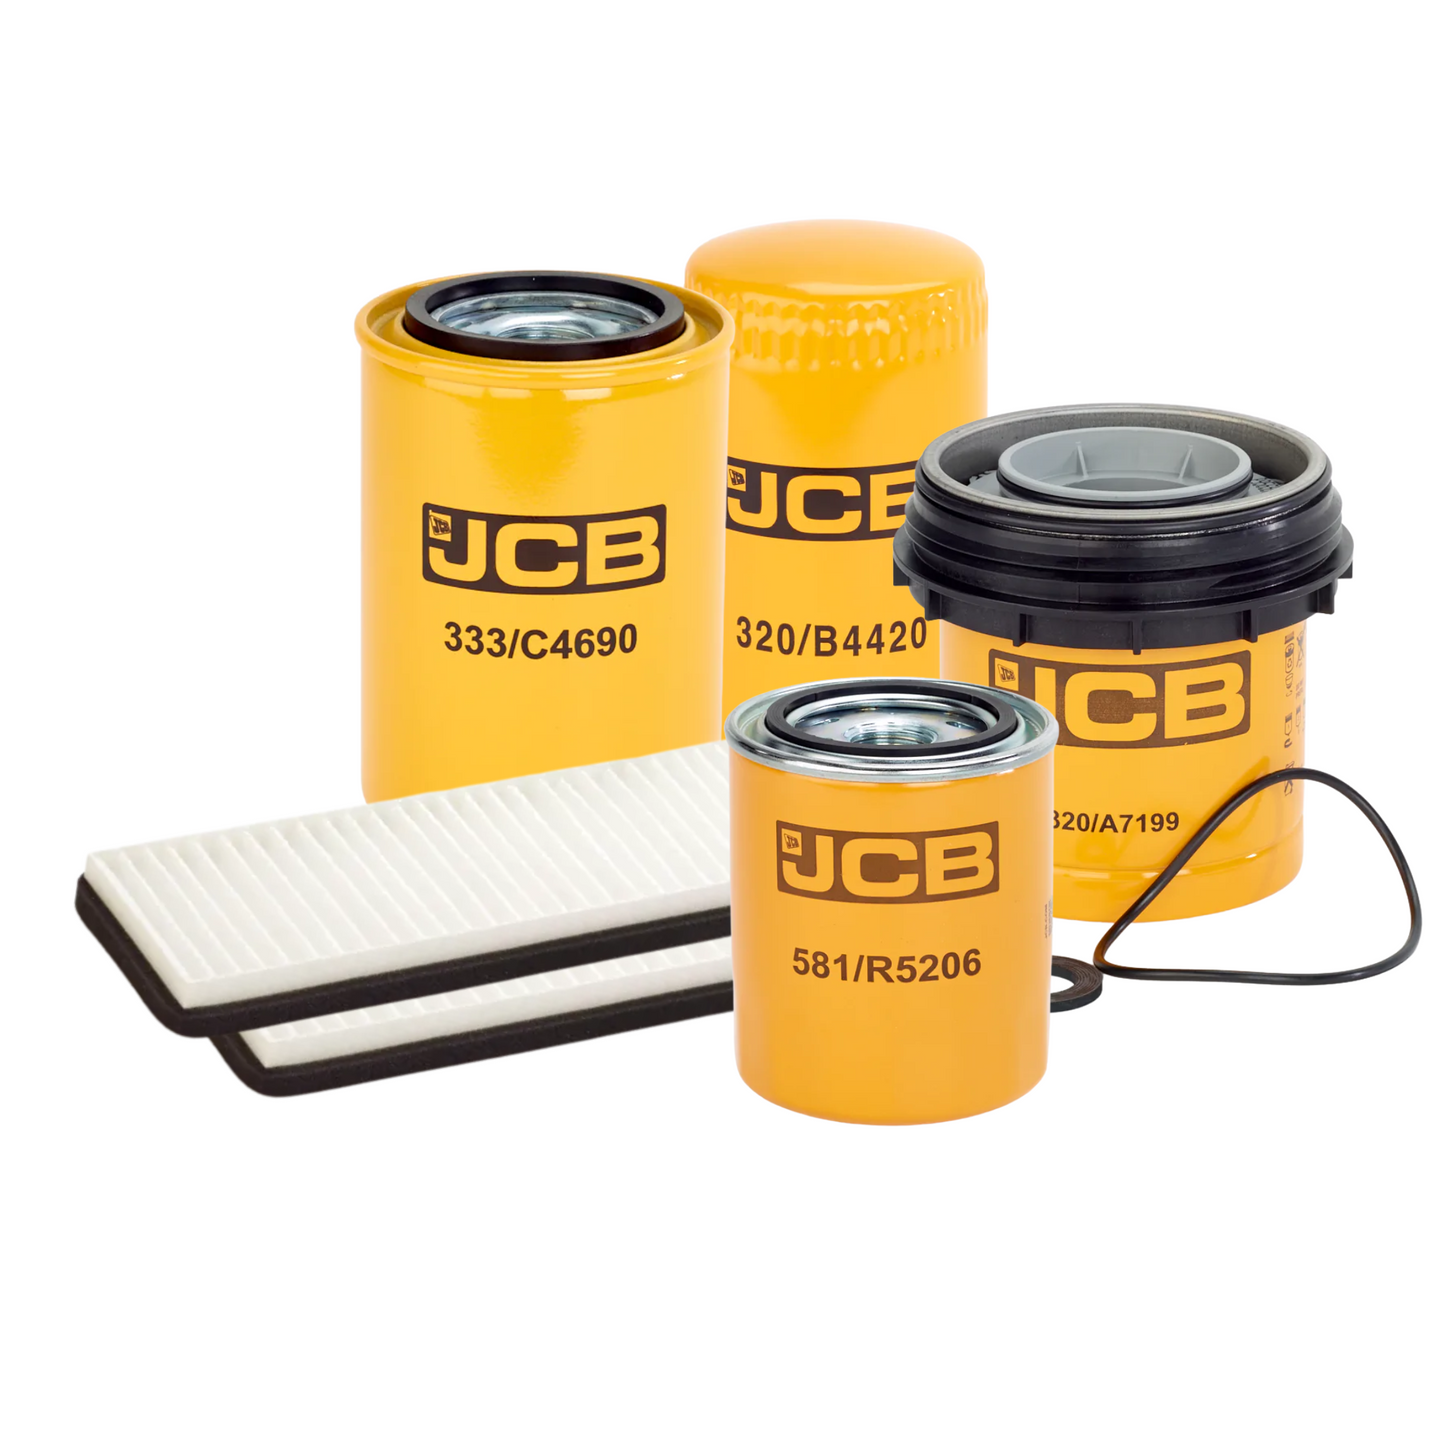 JCB 535-95 6500 Hour Filter Service Kit